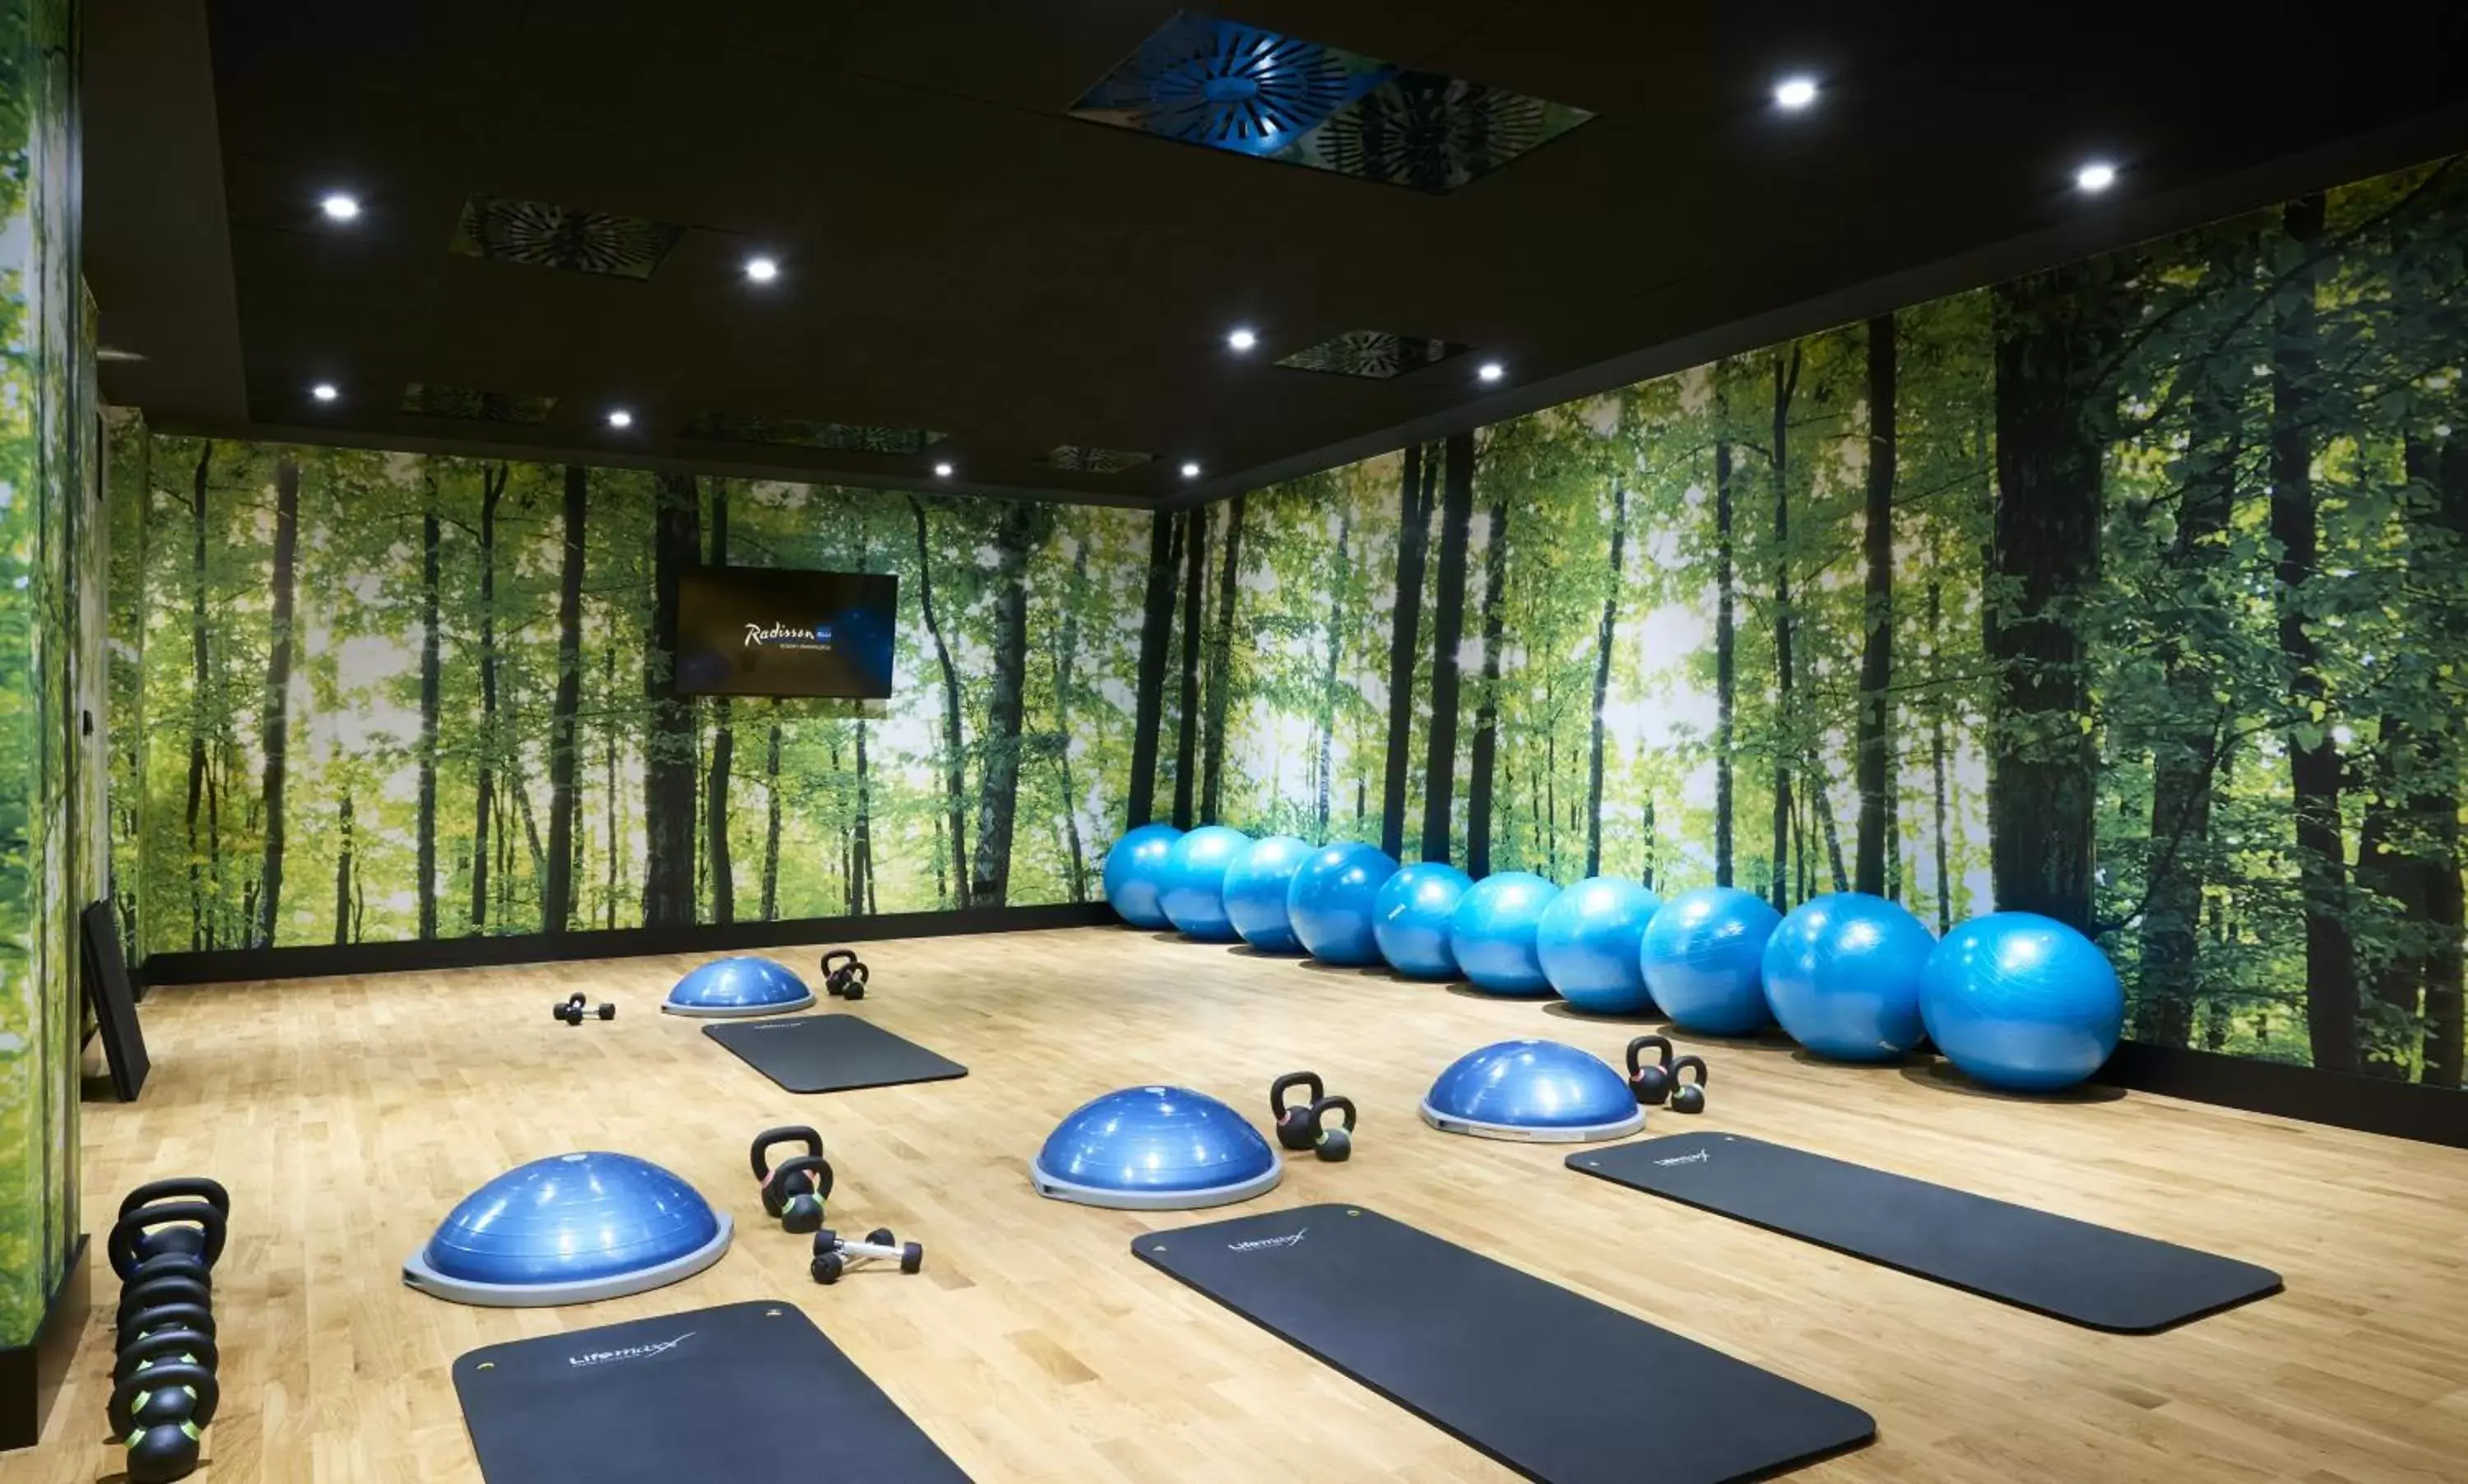 Fitness centre/facilities in Radisson Blu Resort Swinoujscie